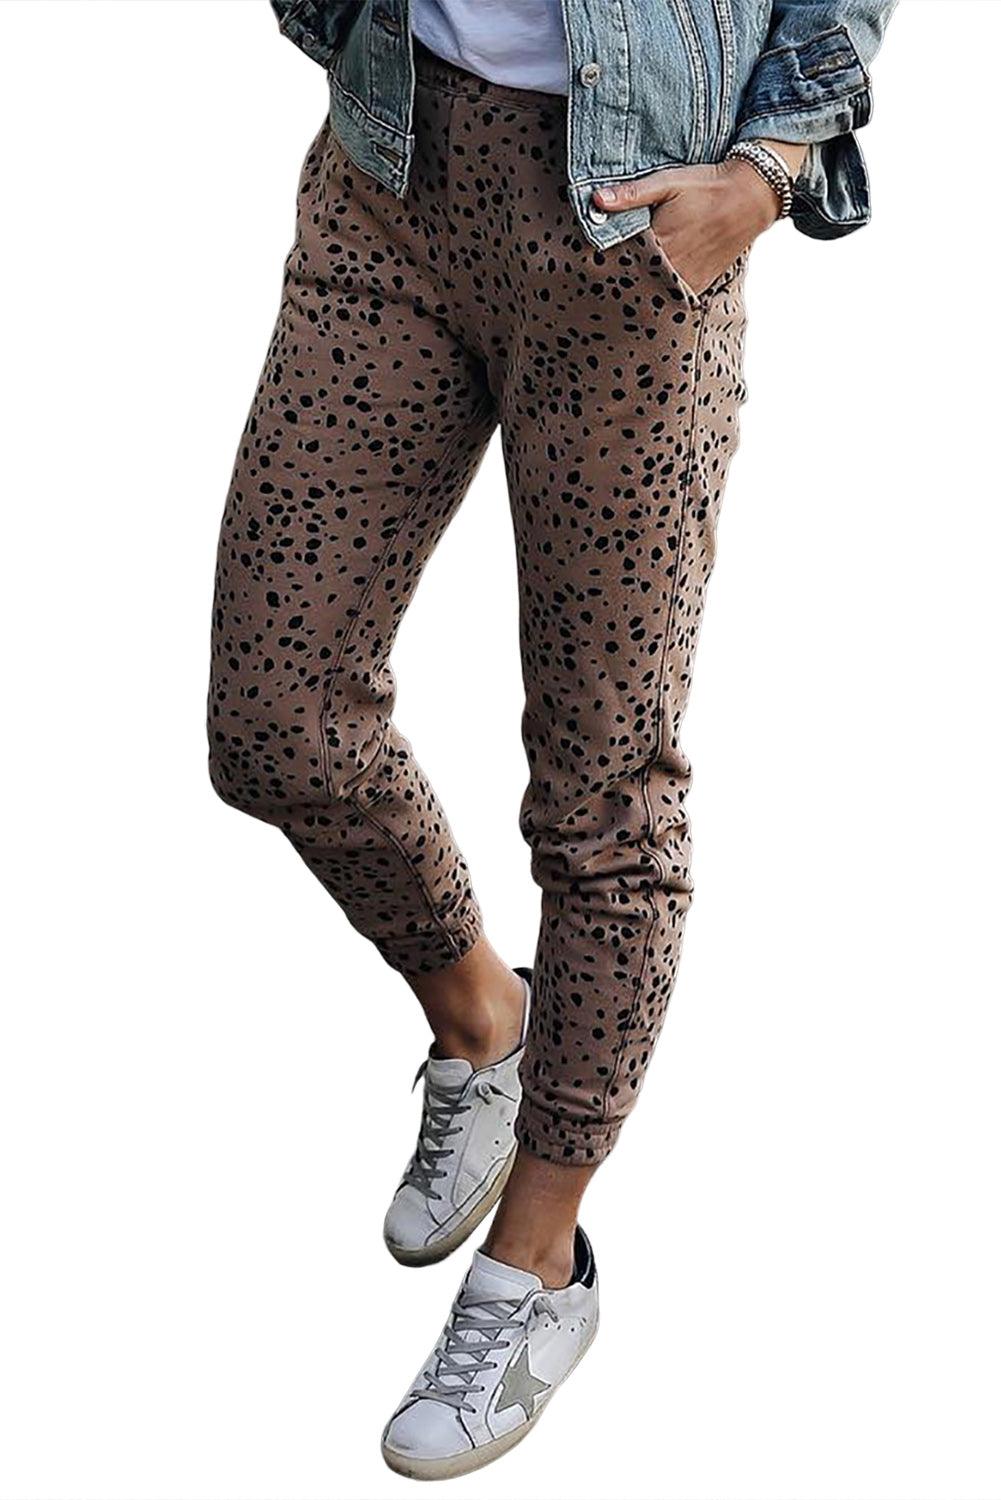 Leopard Animal Spots Pocketed Casual Skinny Pants - L & M Kee, LLC